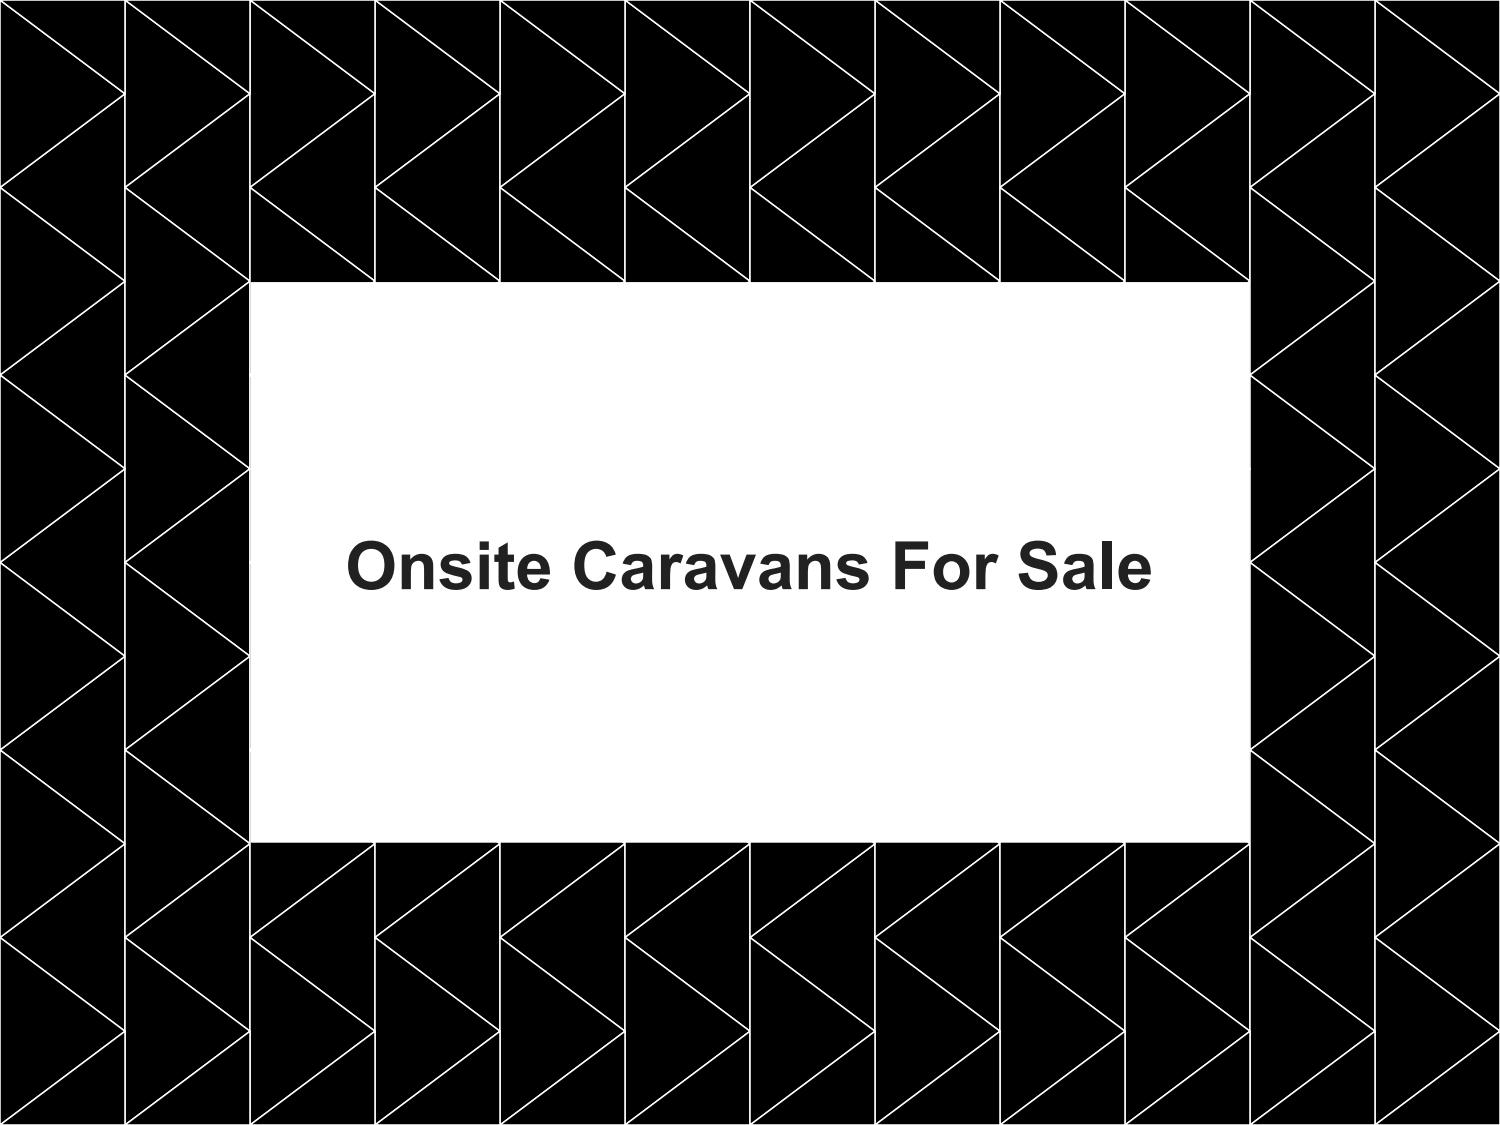 Onsite Caravans for Sale